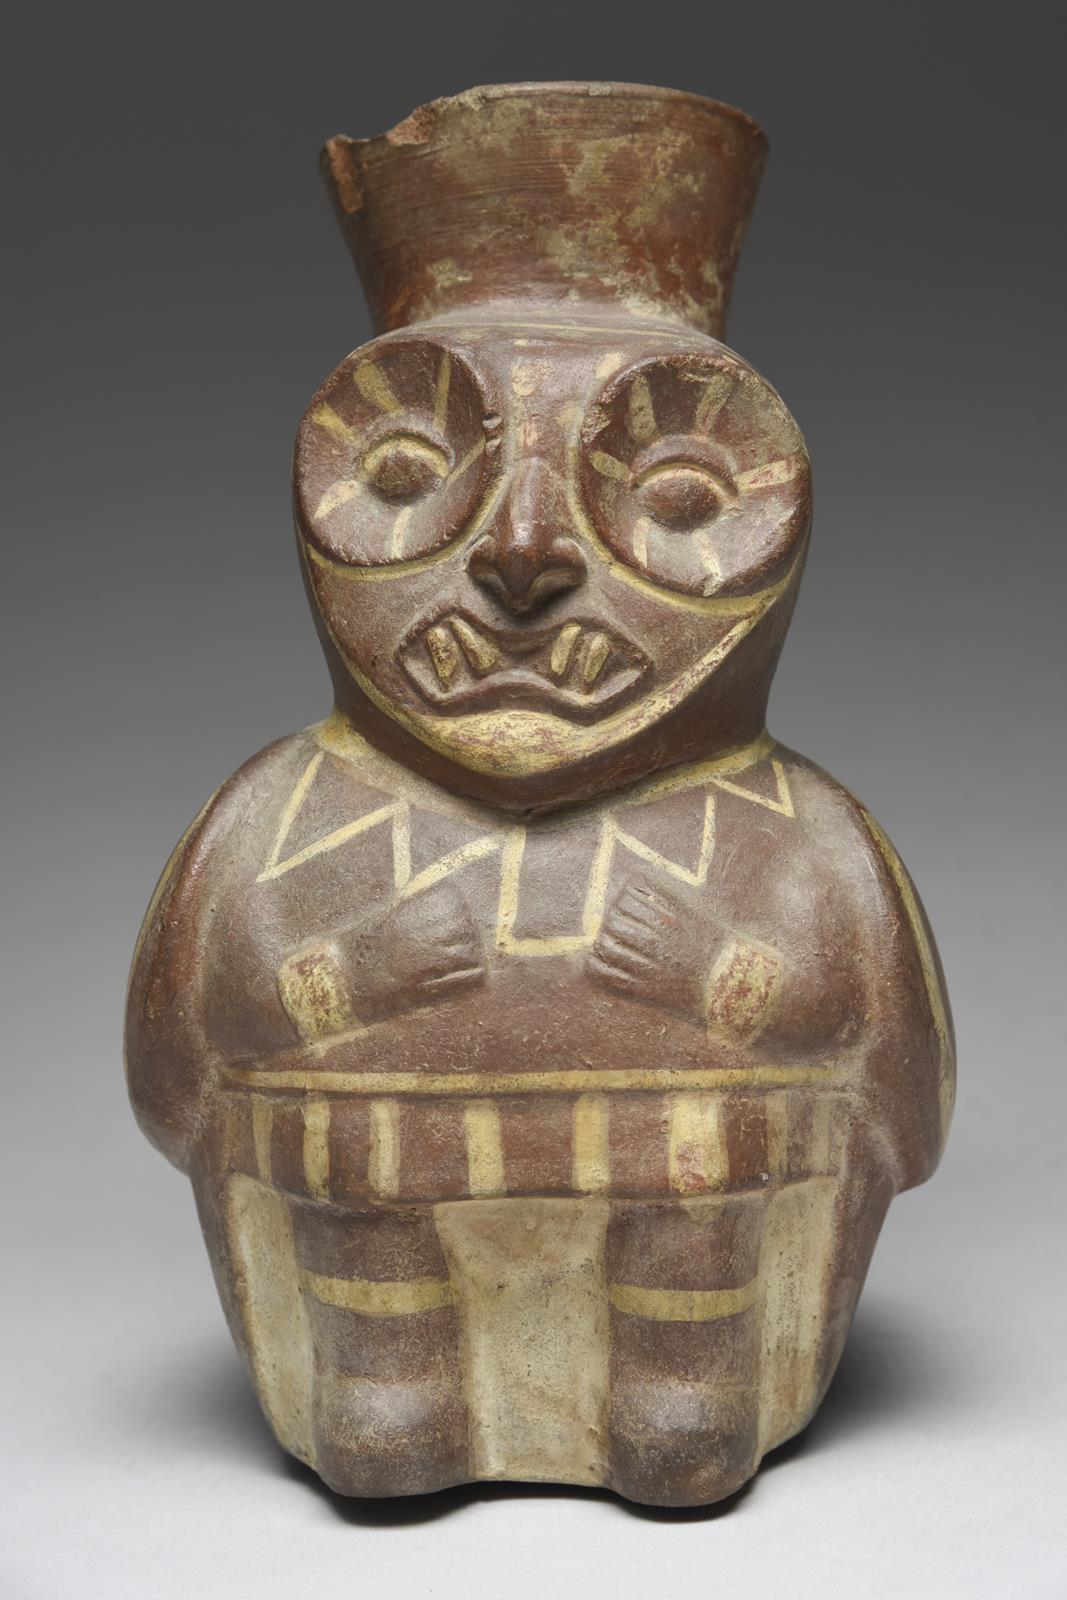 A Moche anthropomorphic vessel Peru, circa 100 - 700 AD terracotta, modelled as an owl human